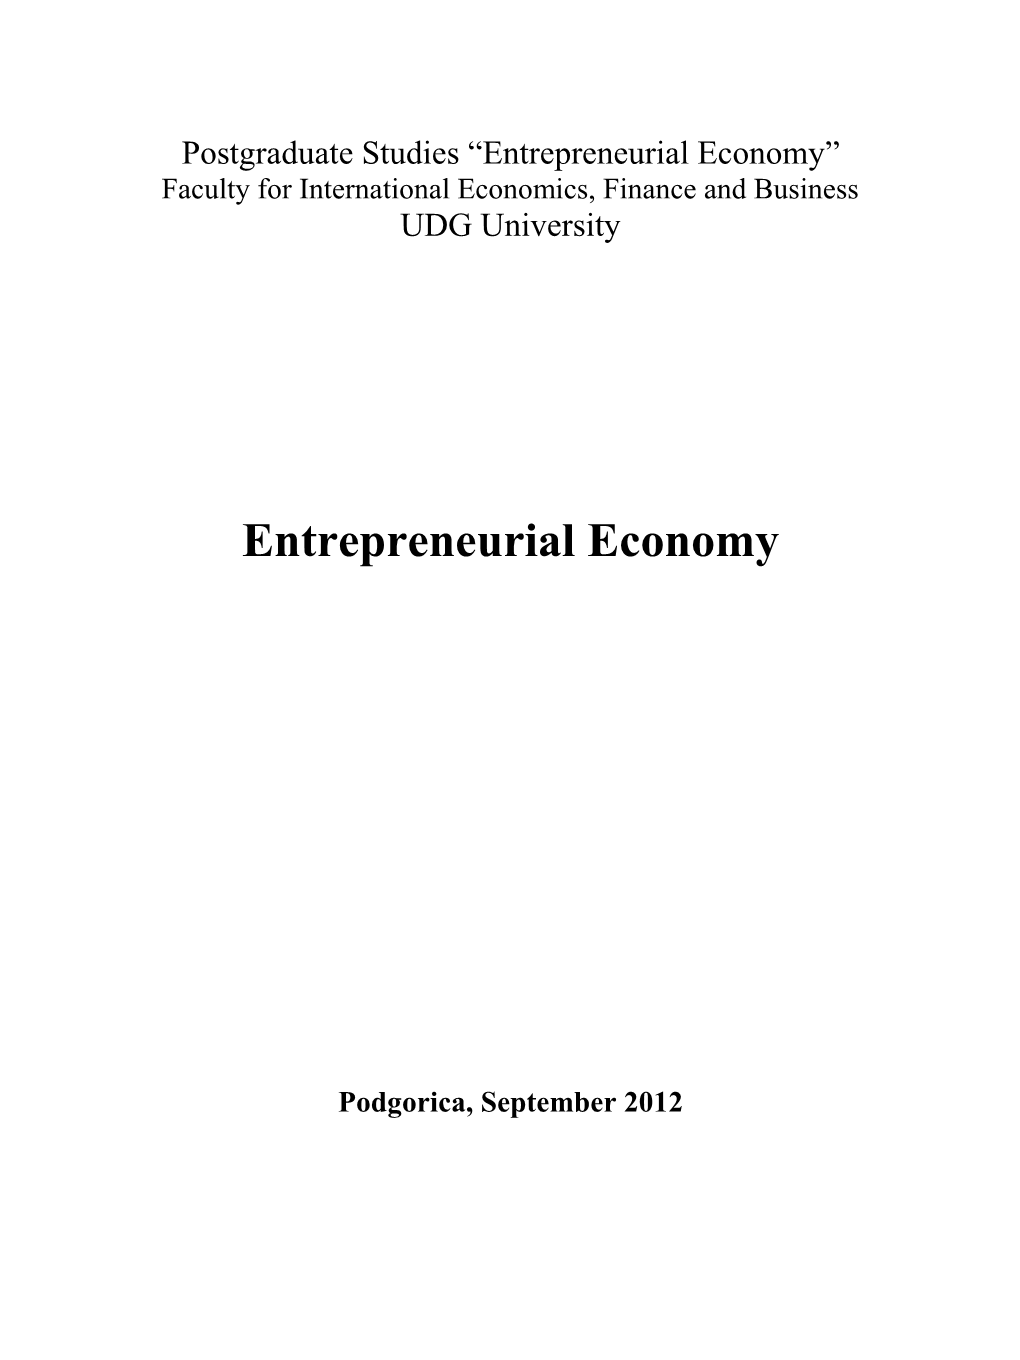 Entrepreneurial Economy” Faculty for International Economics, Finance and Business UDG University